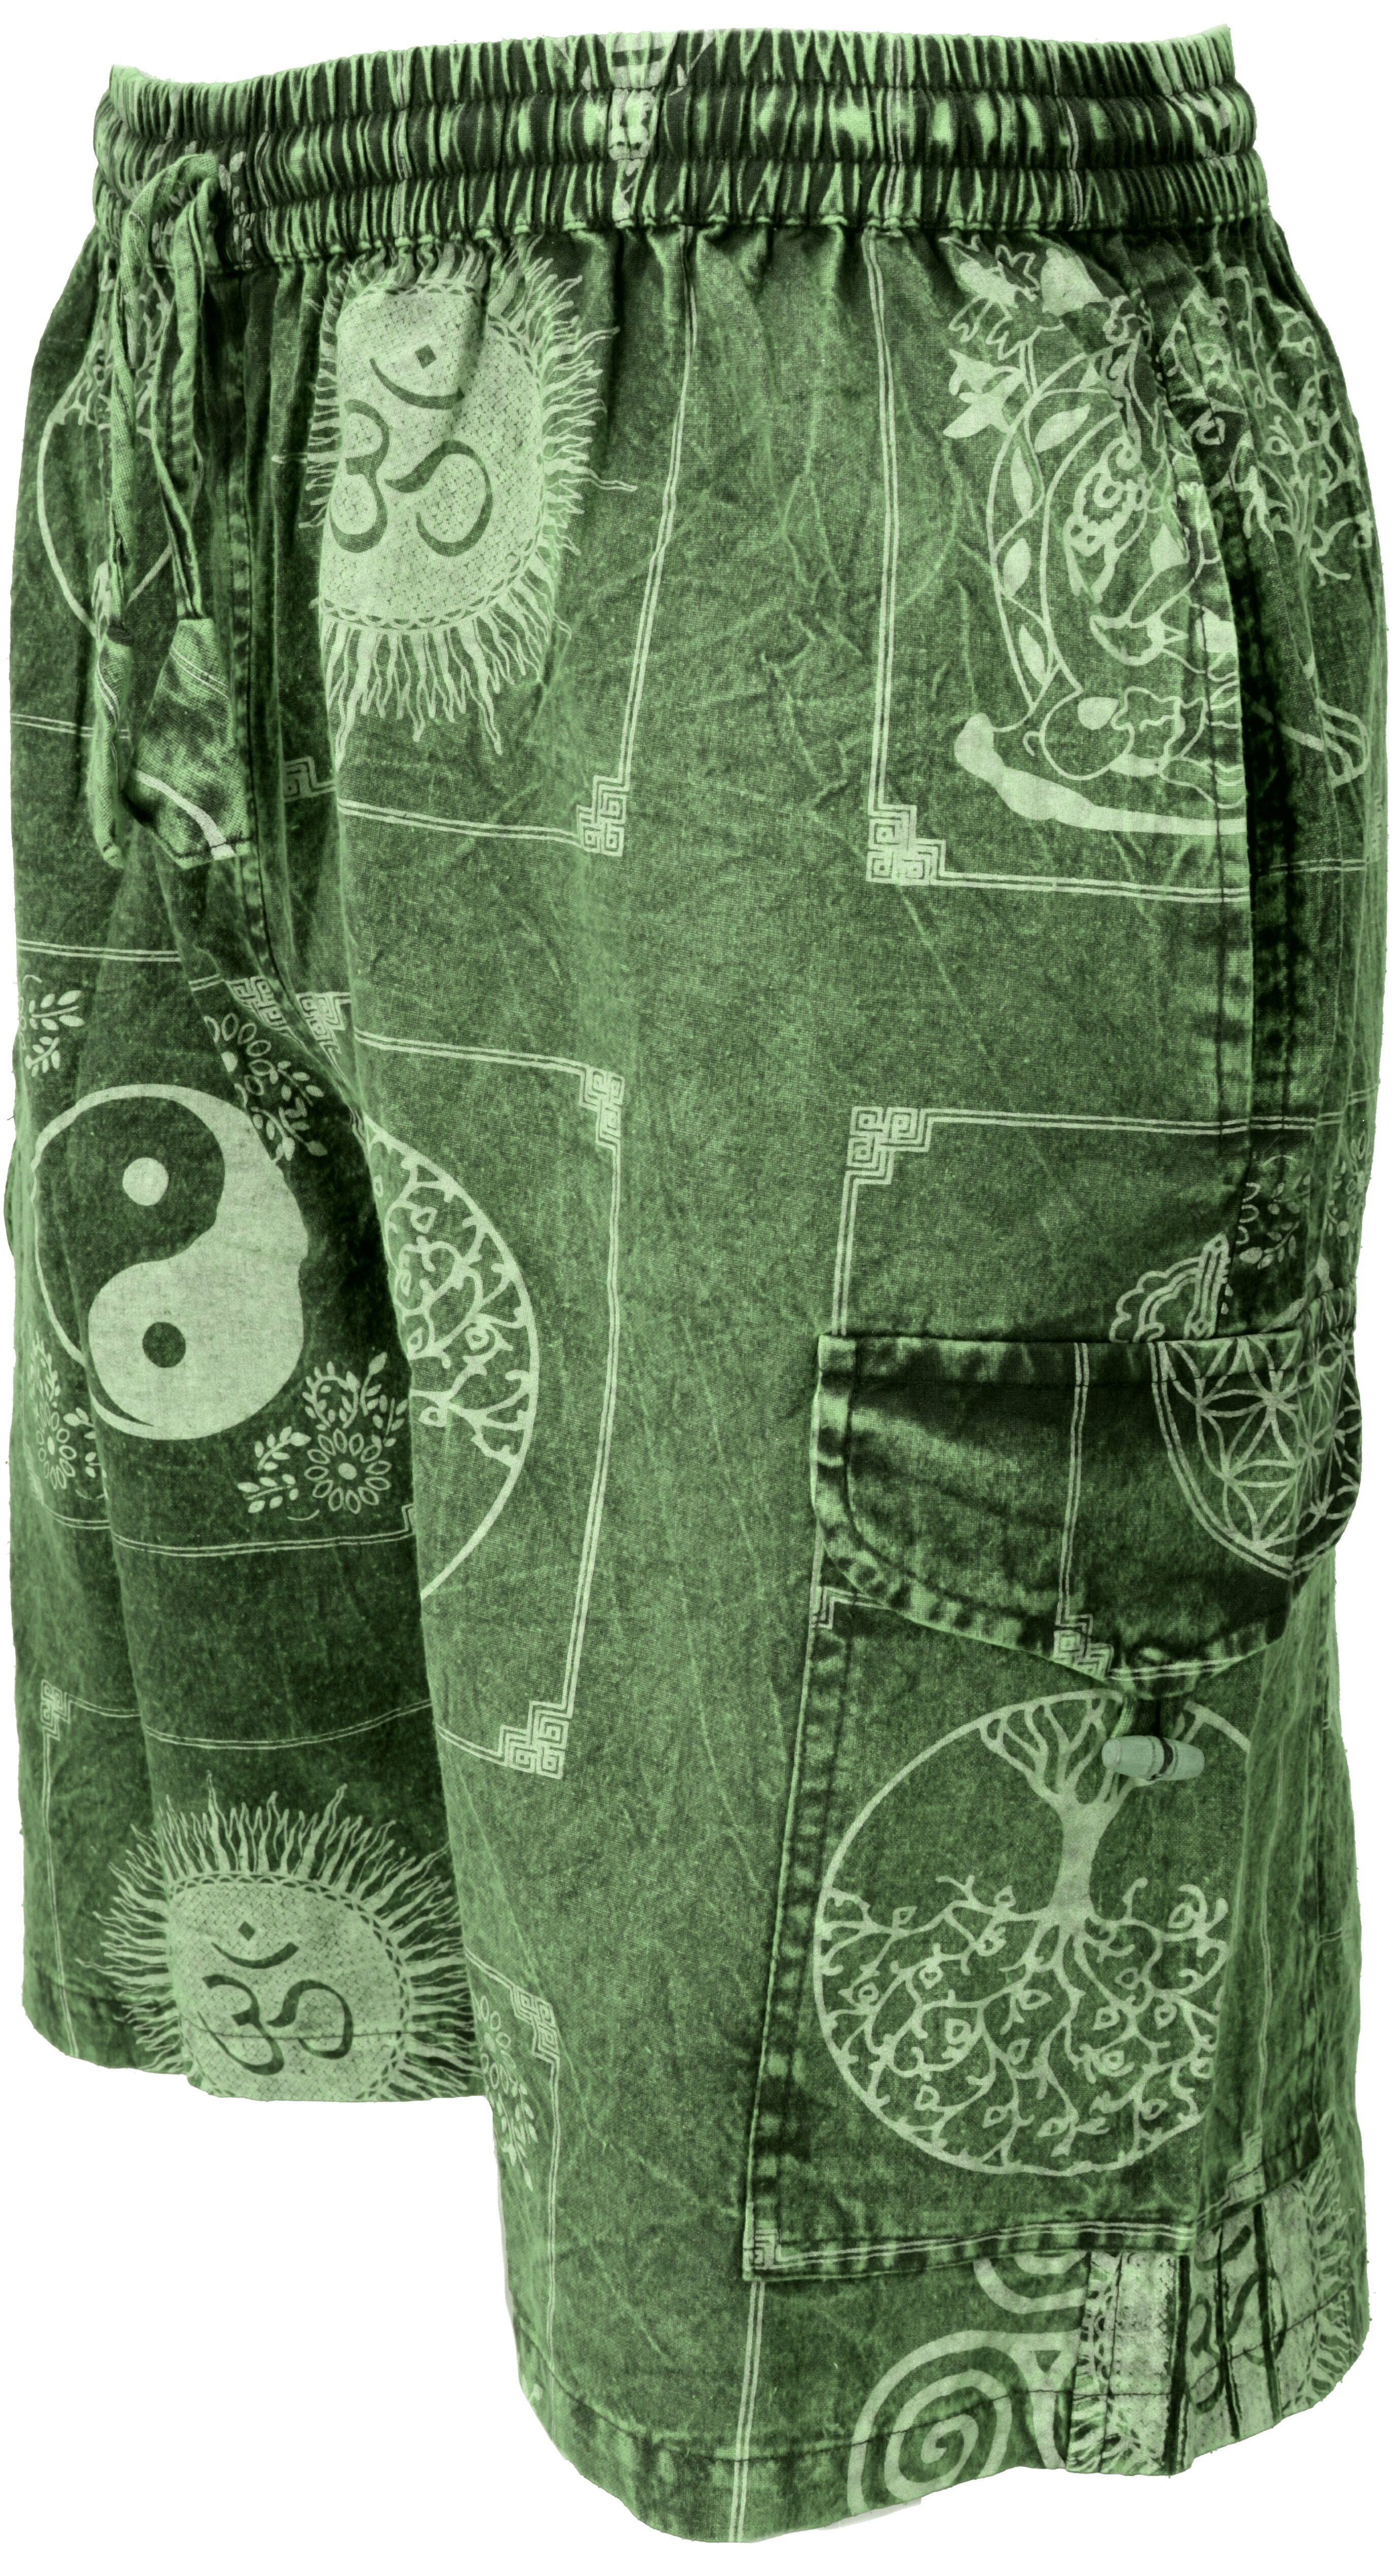 Ethno Relaxhose Style, Ethno -.. Guru-Shop grün alternative Hippie, aus Bekleidung Shorts Yogashorts, Nepal stonewash